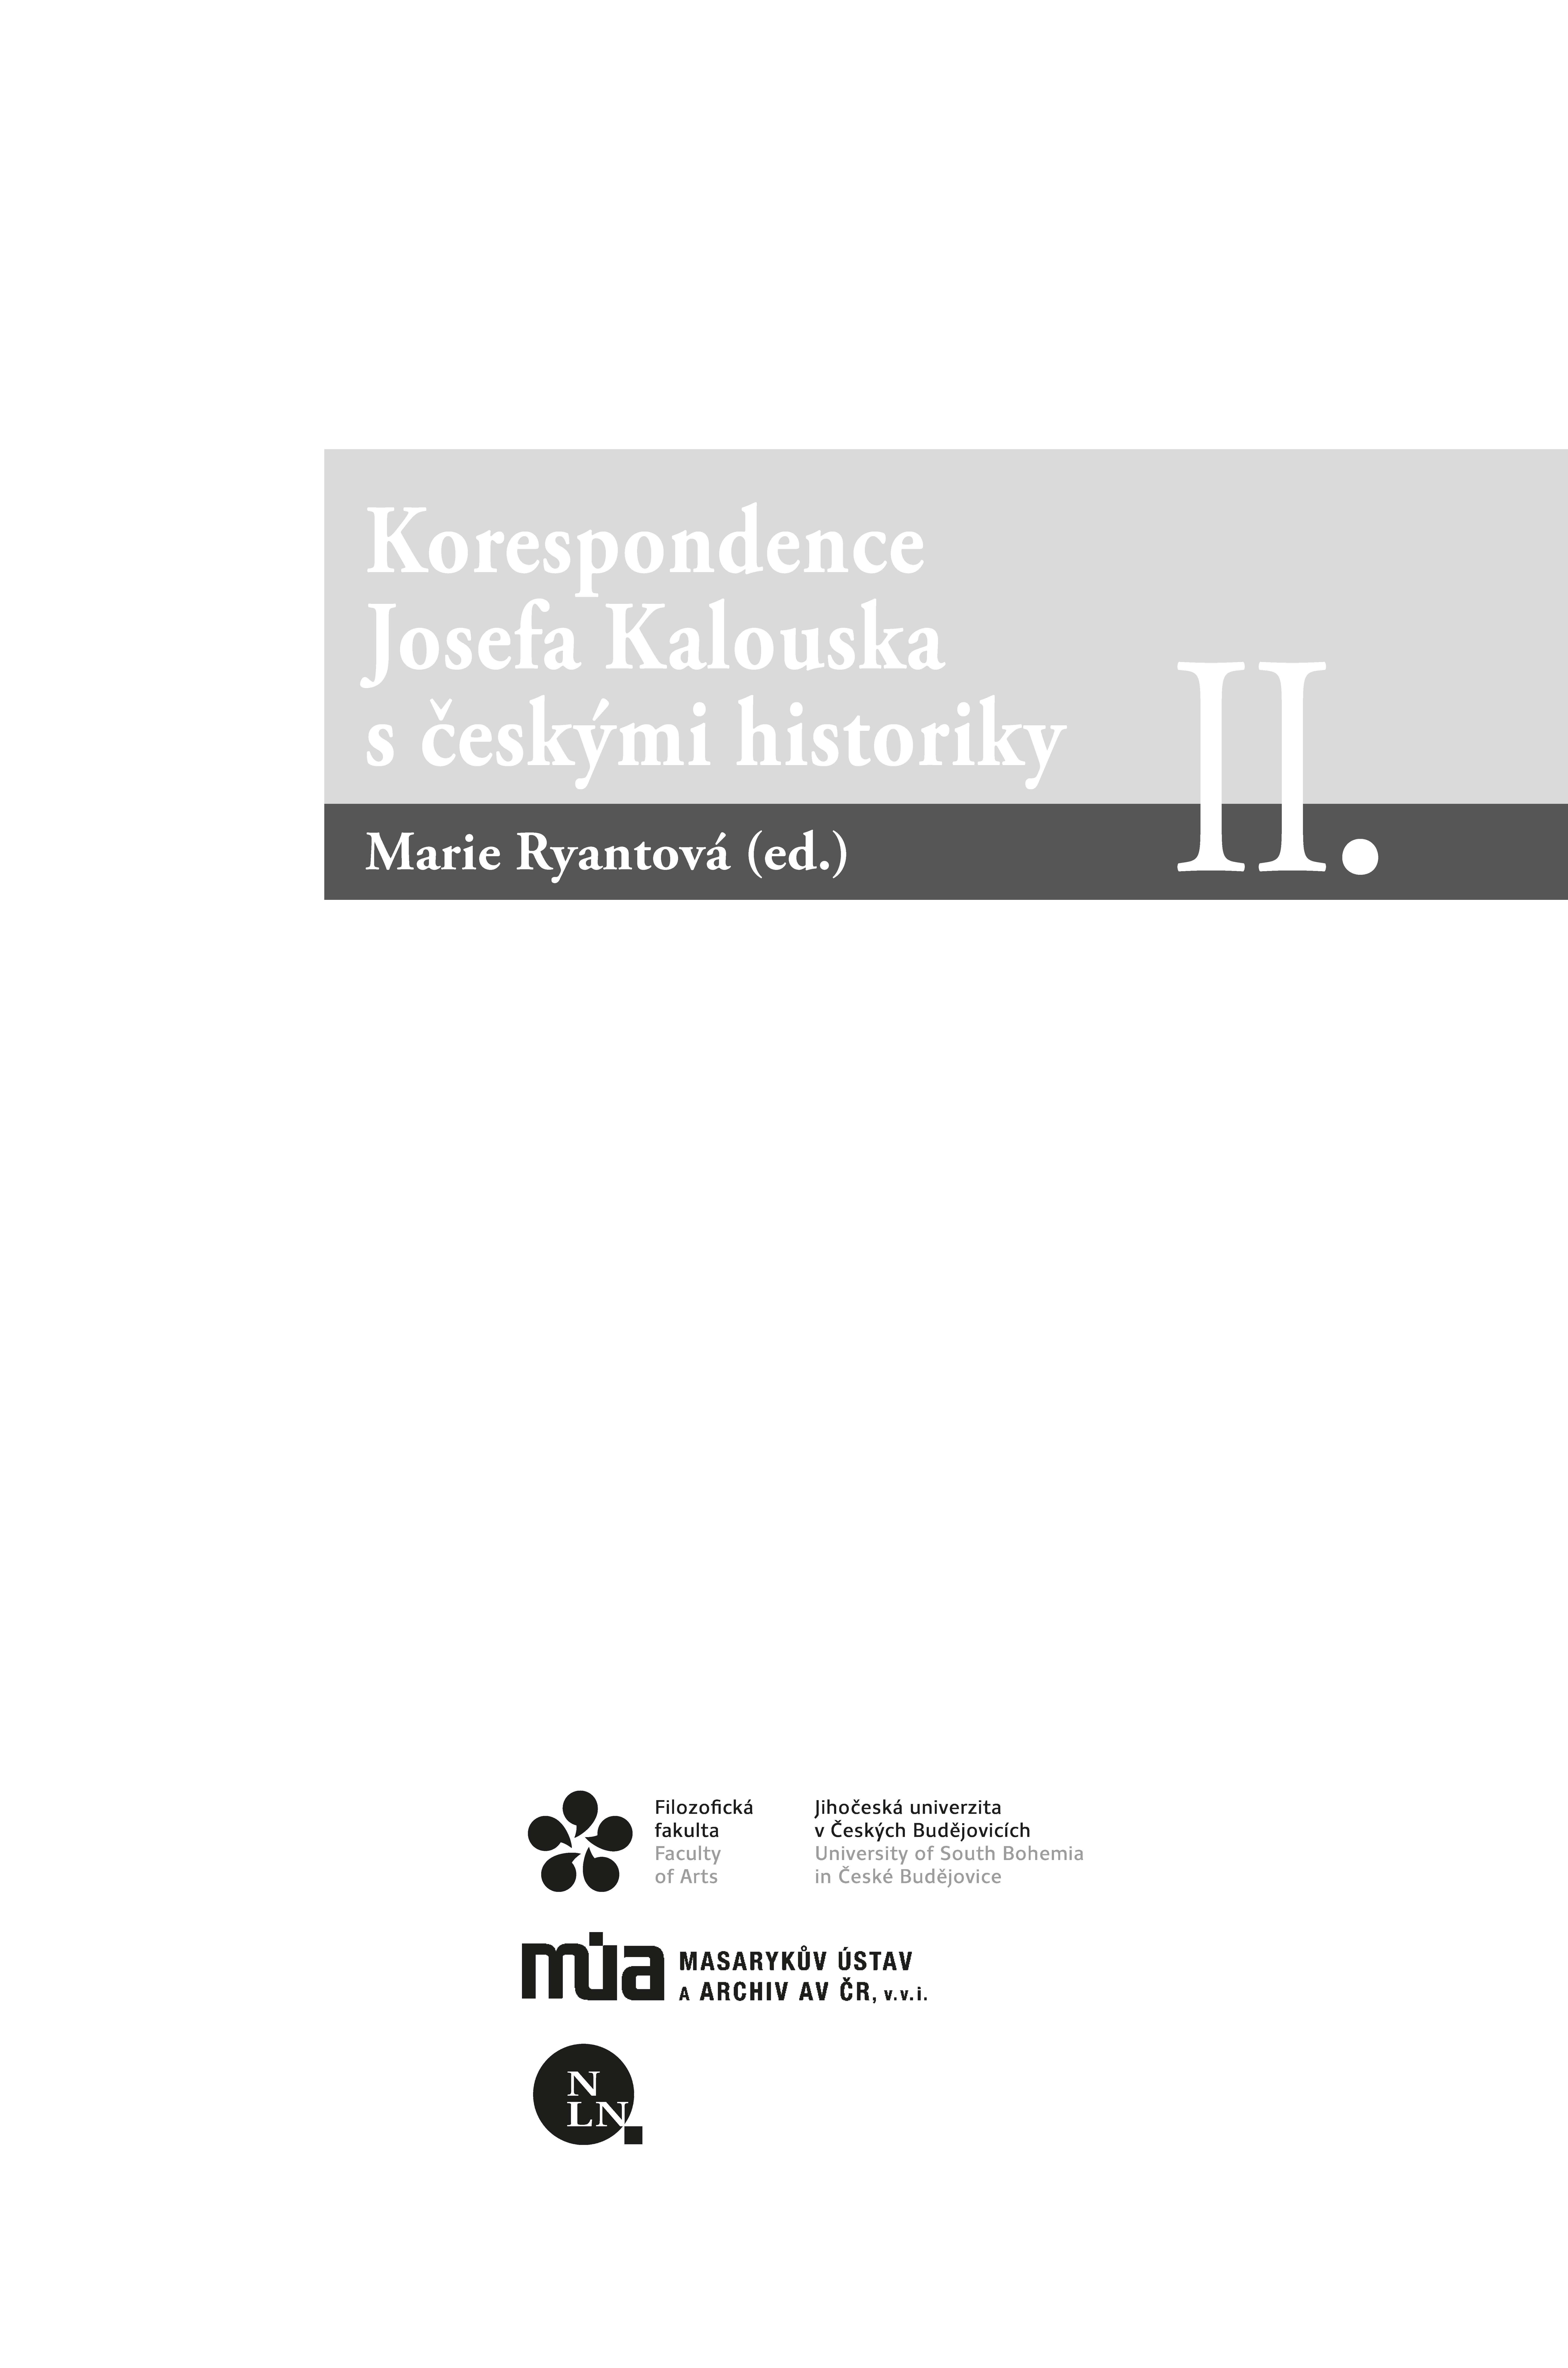 Korespondence Josefa Kalouska s českými historiky II. ukázka-1